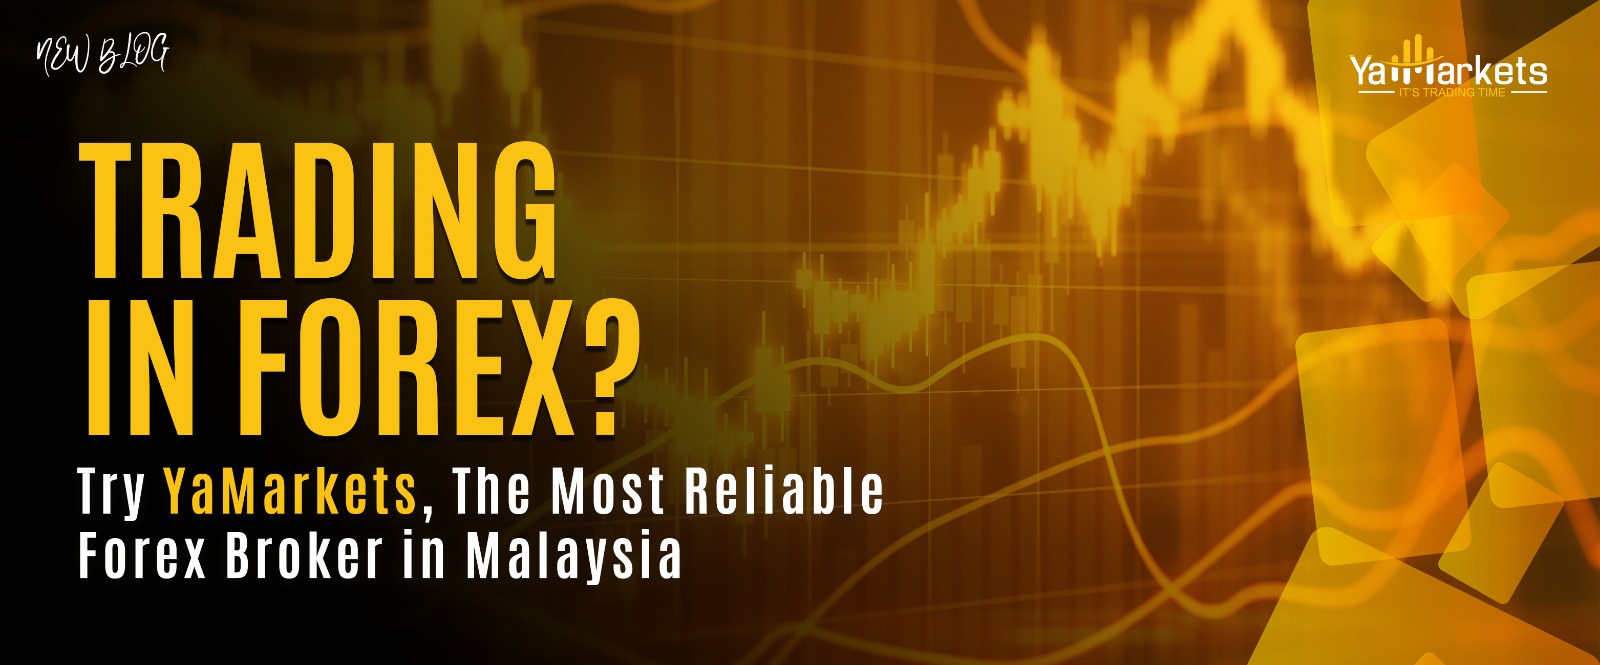 Top Forex brokers in Malaysia